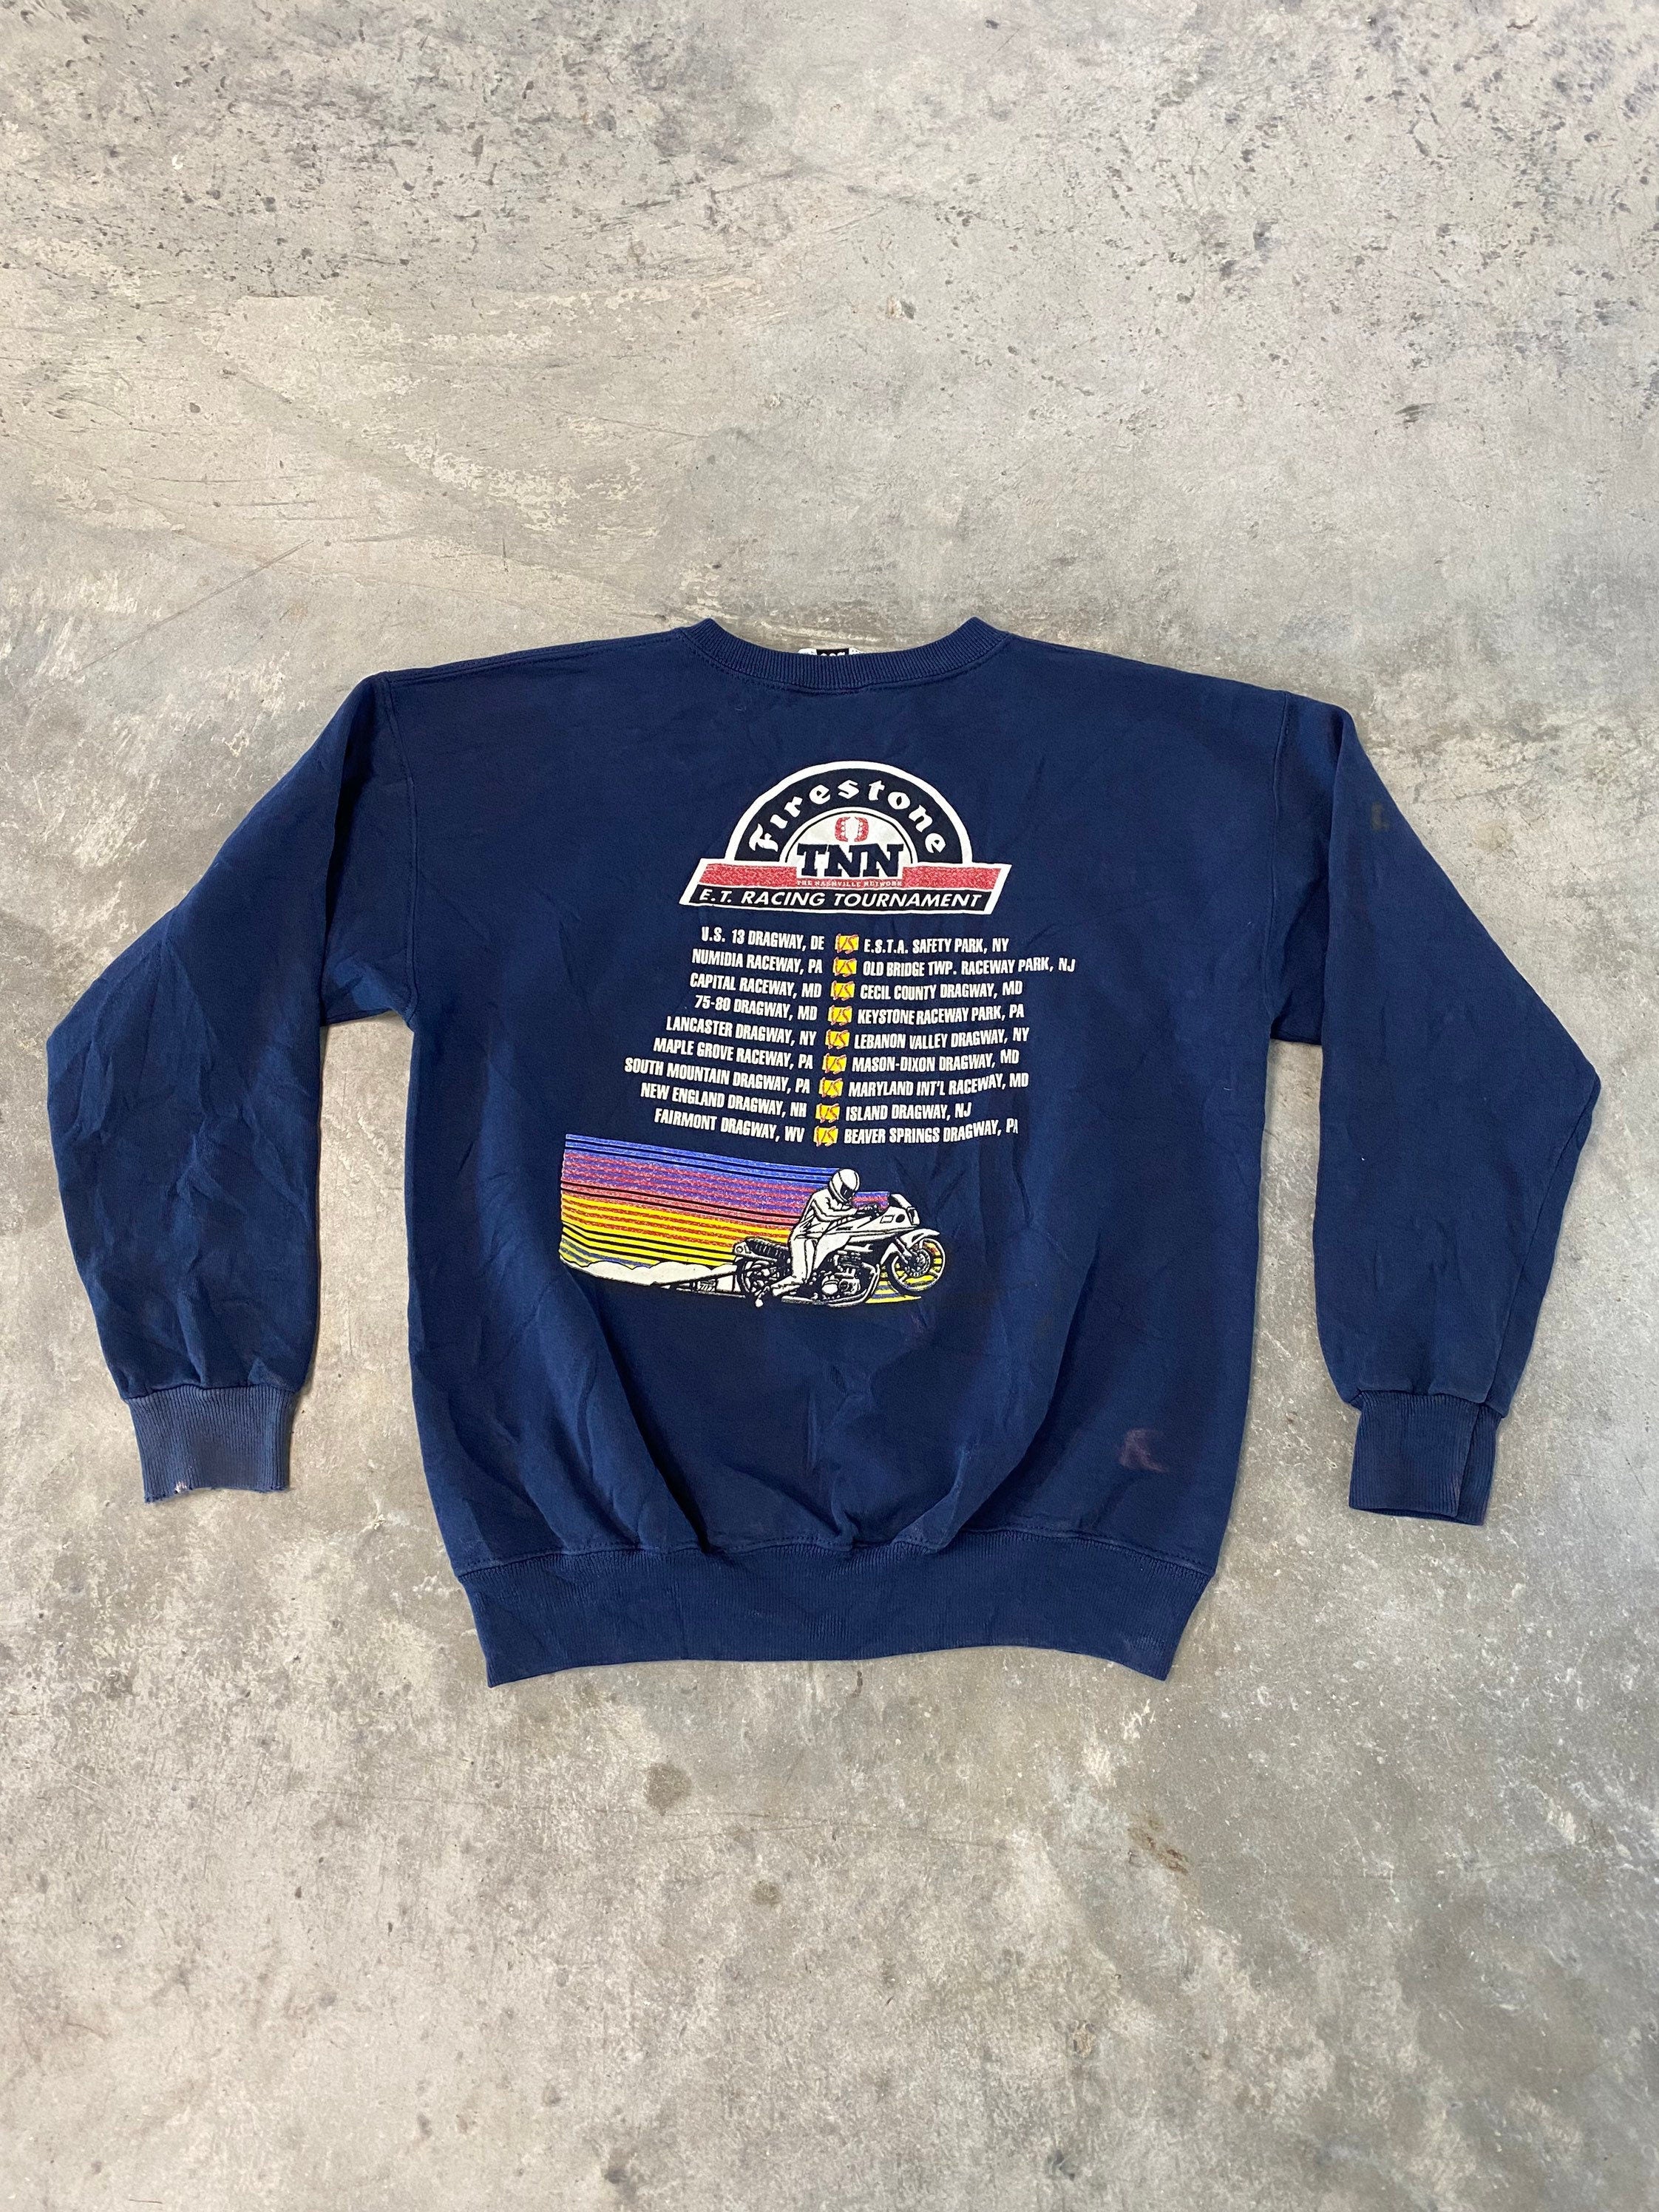 Vintage 1991 Firestone Racing Tournament Sweatshirt Size Small